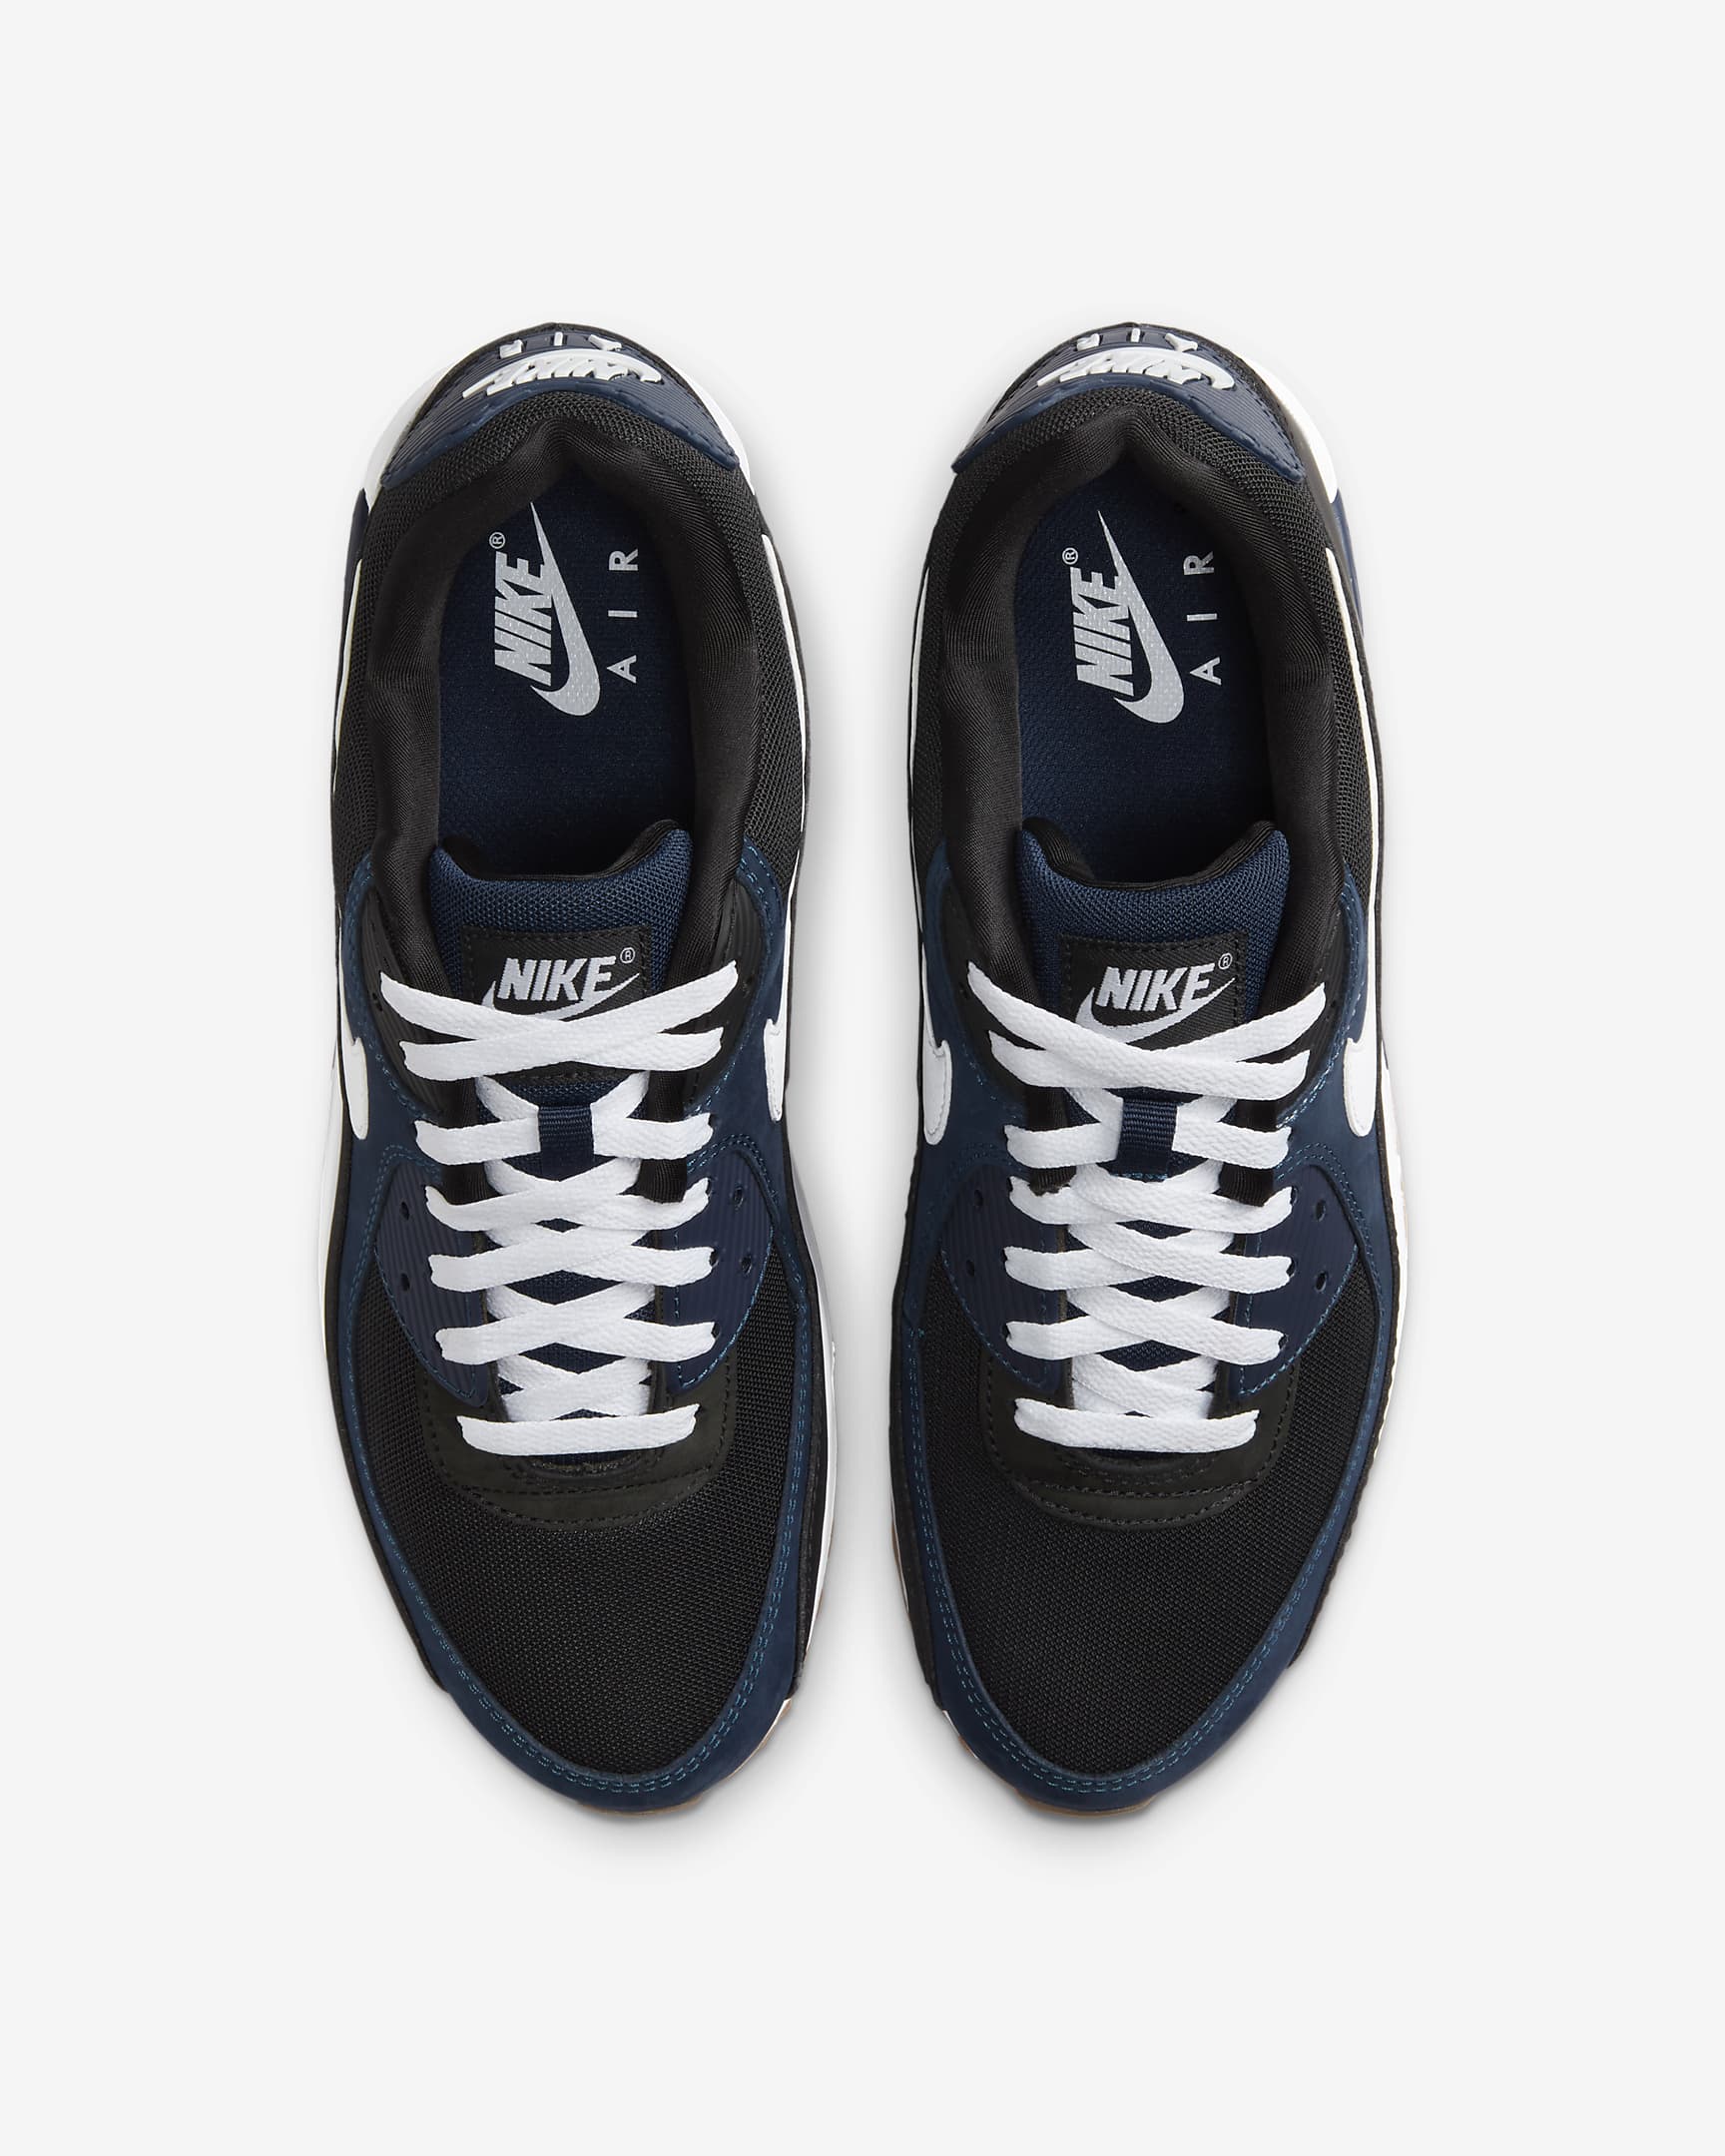 Nike Air Max 90 Men's Shoes - Midnight Navy/Black/Gum Medium Brown/White